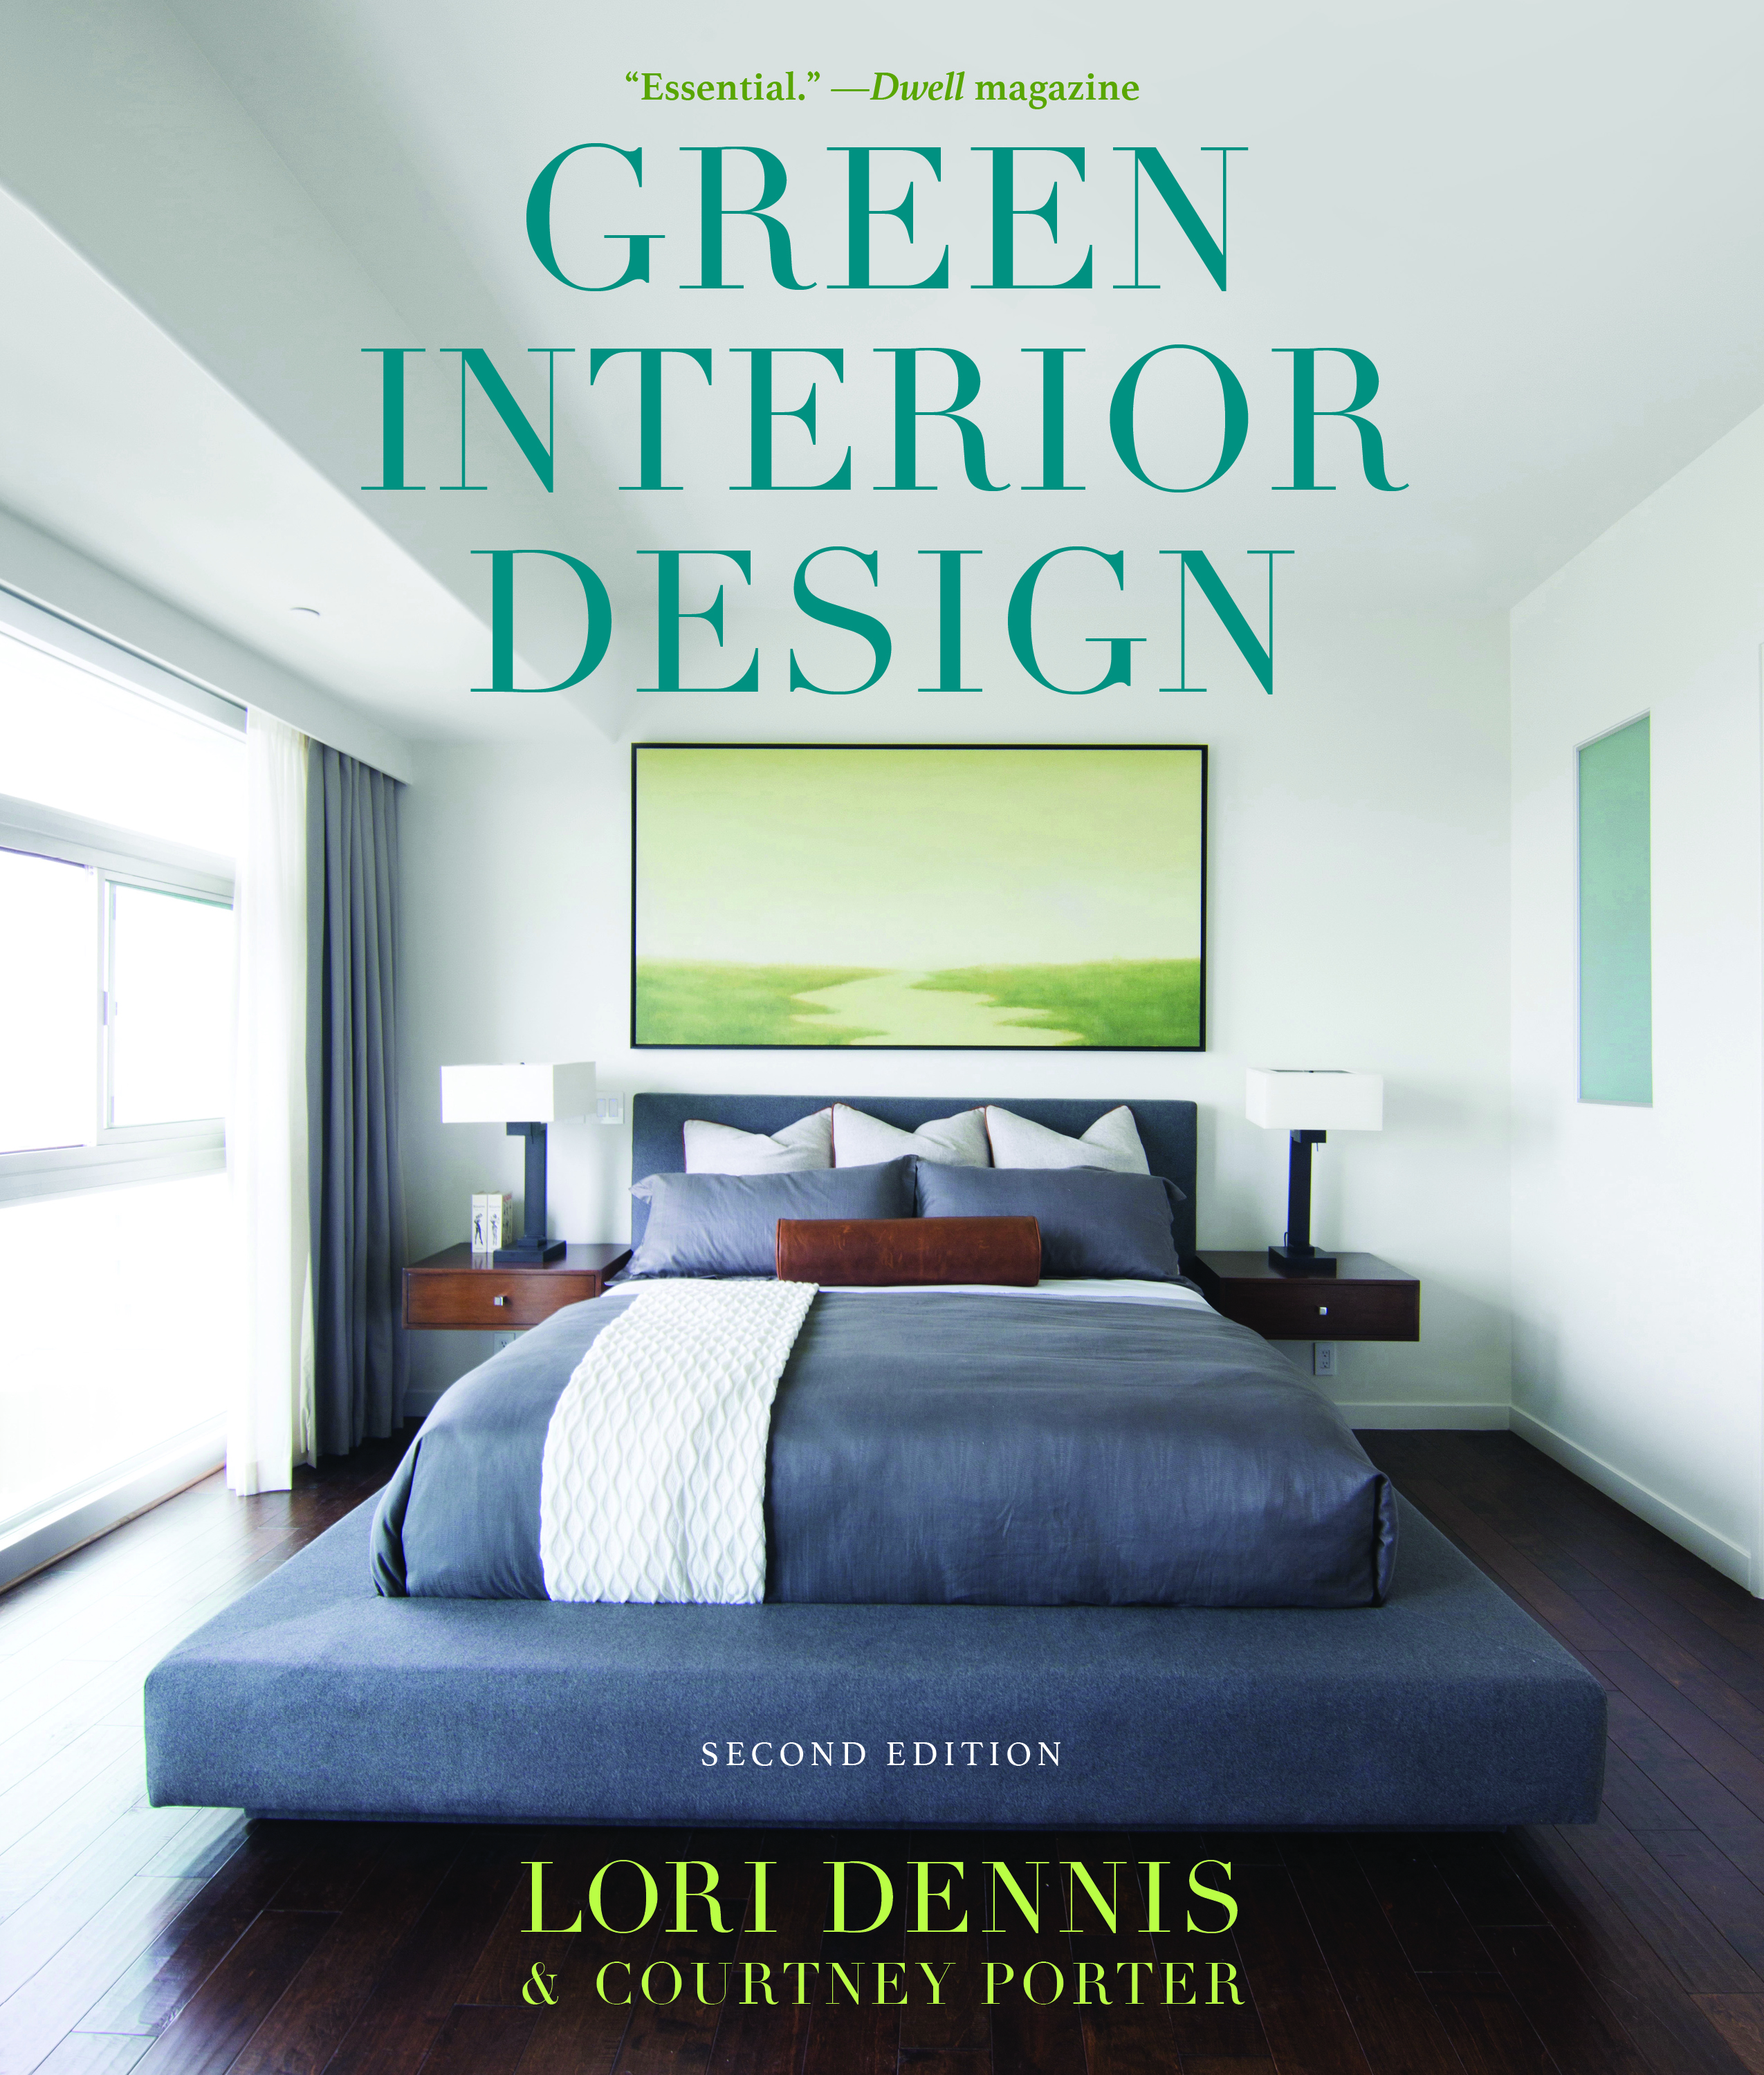 Green Interior Design by Courtney Porter and Lori Dennis